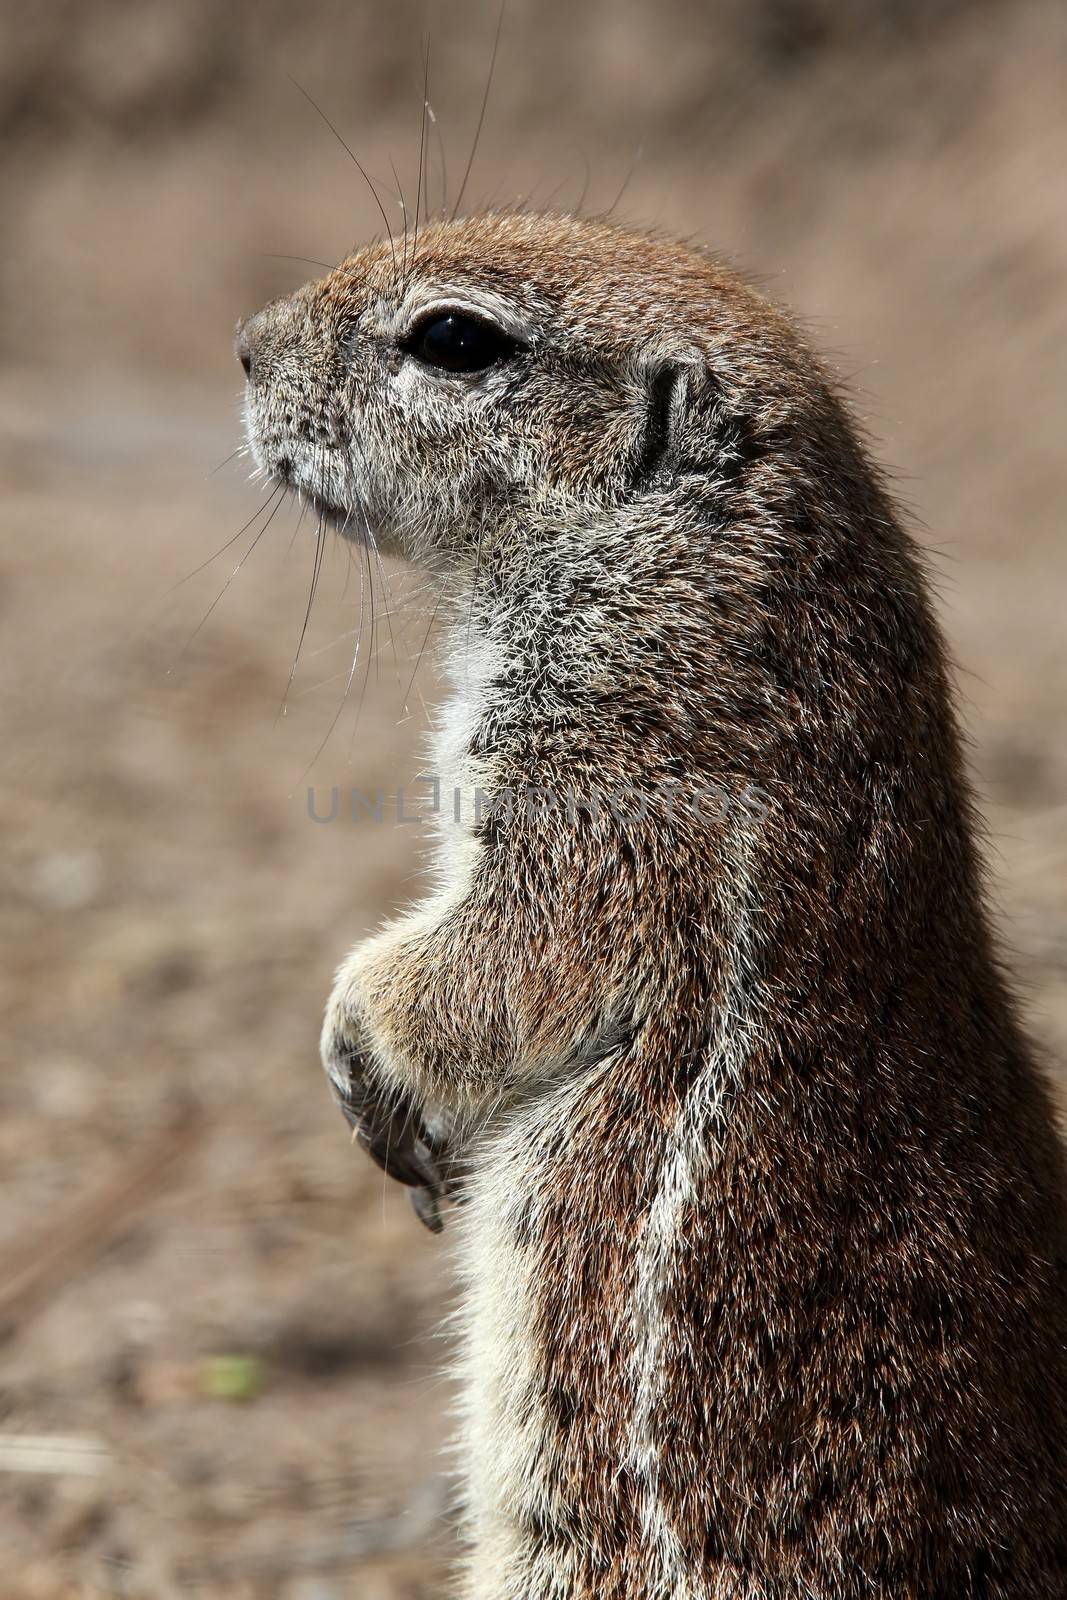 Cute Ground Squirrel by fouroaks